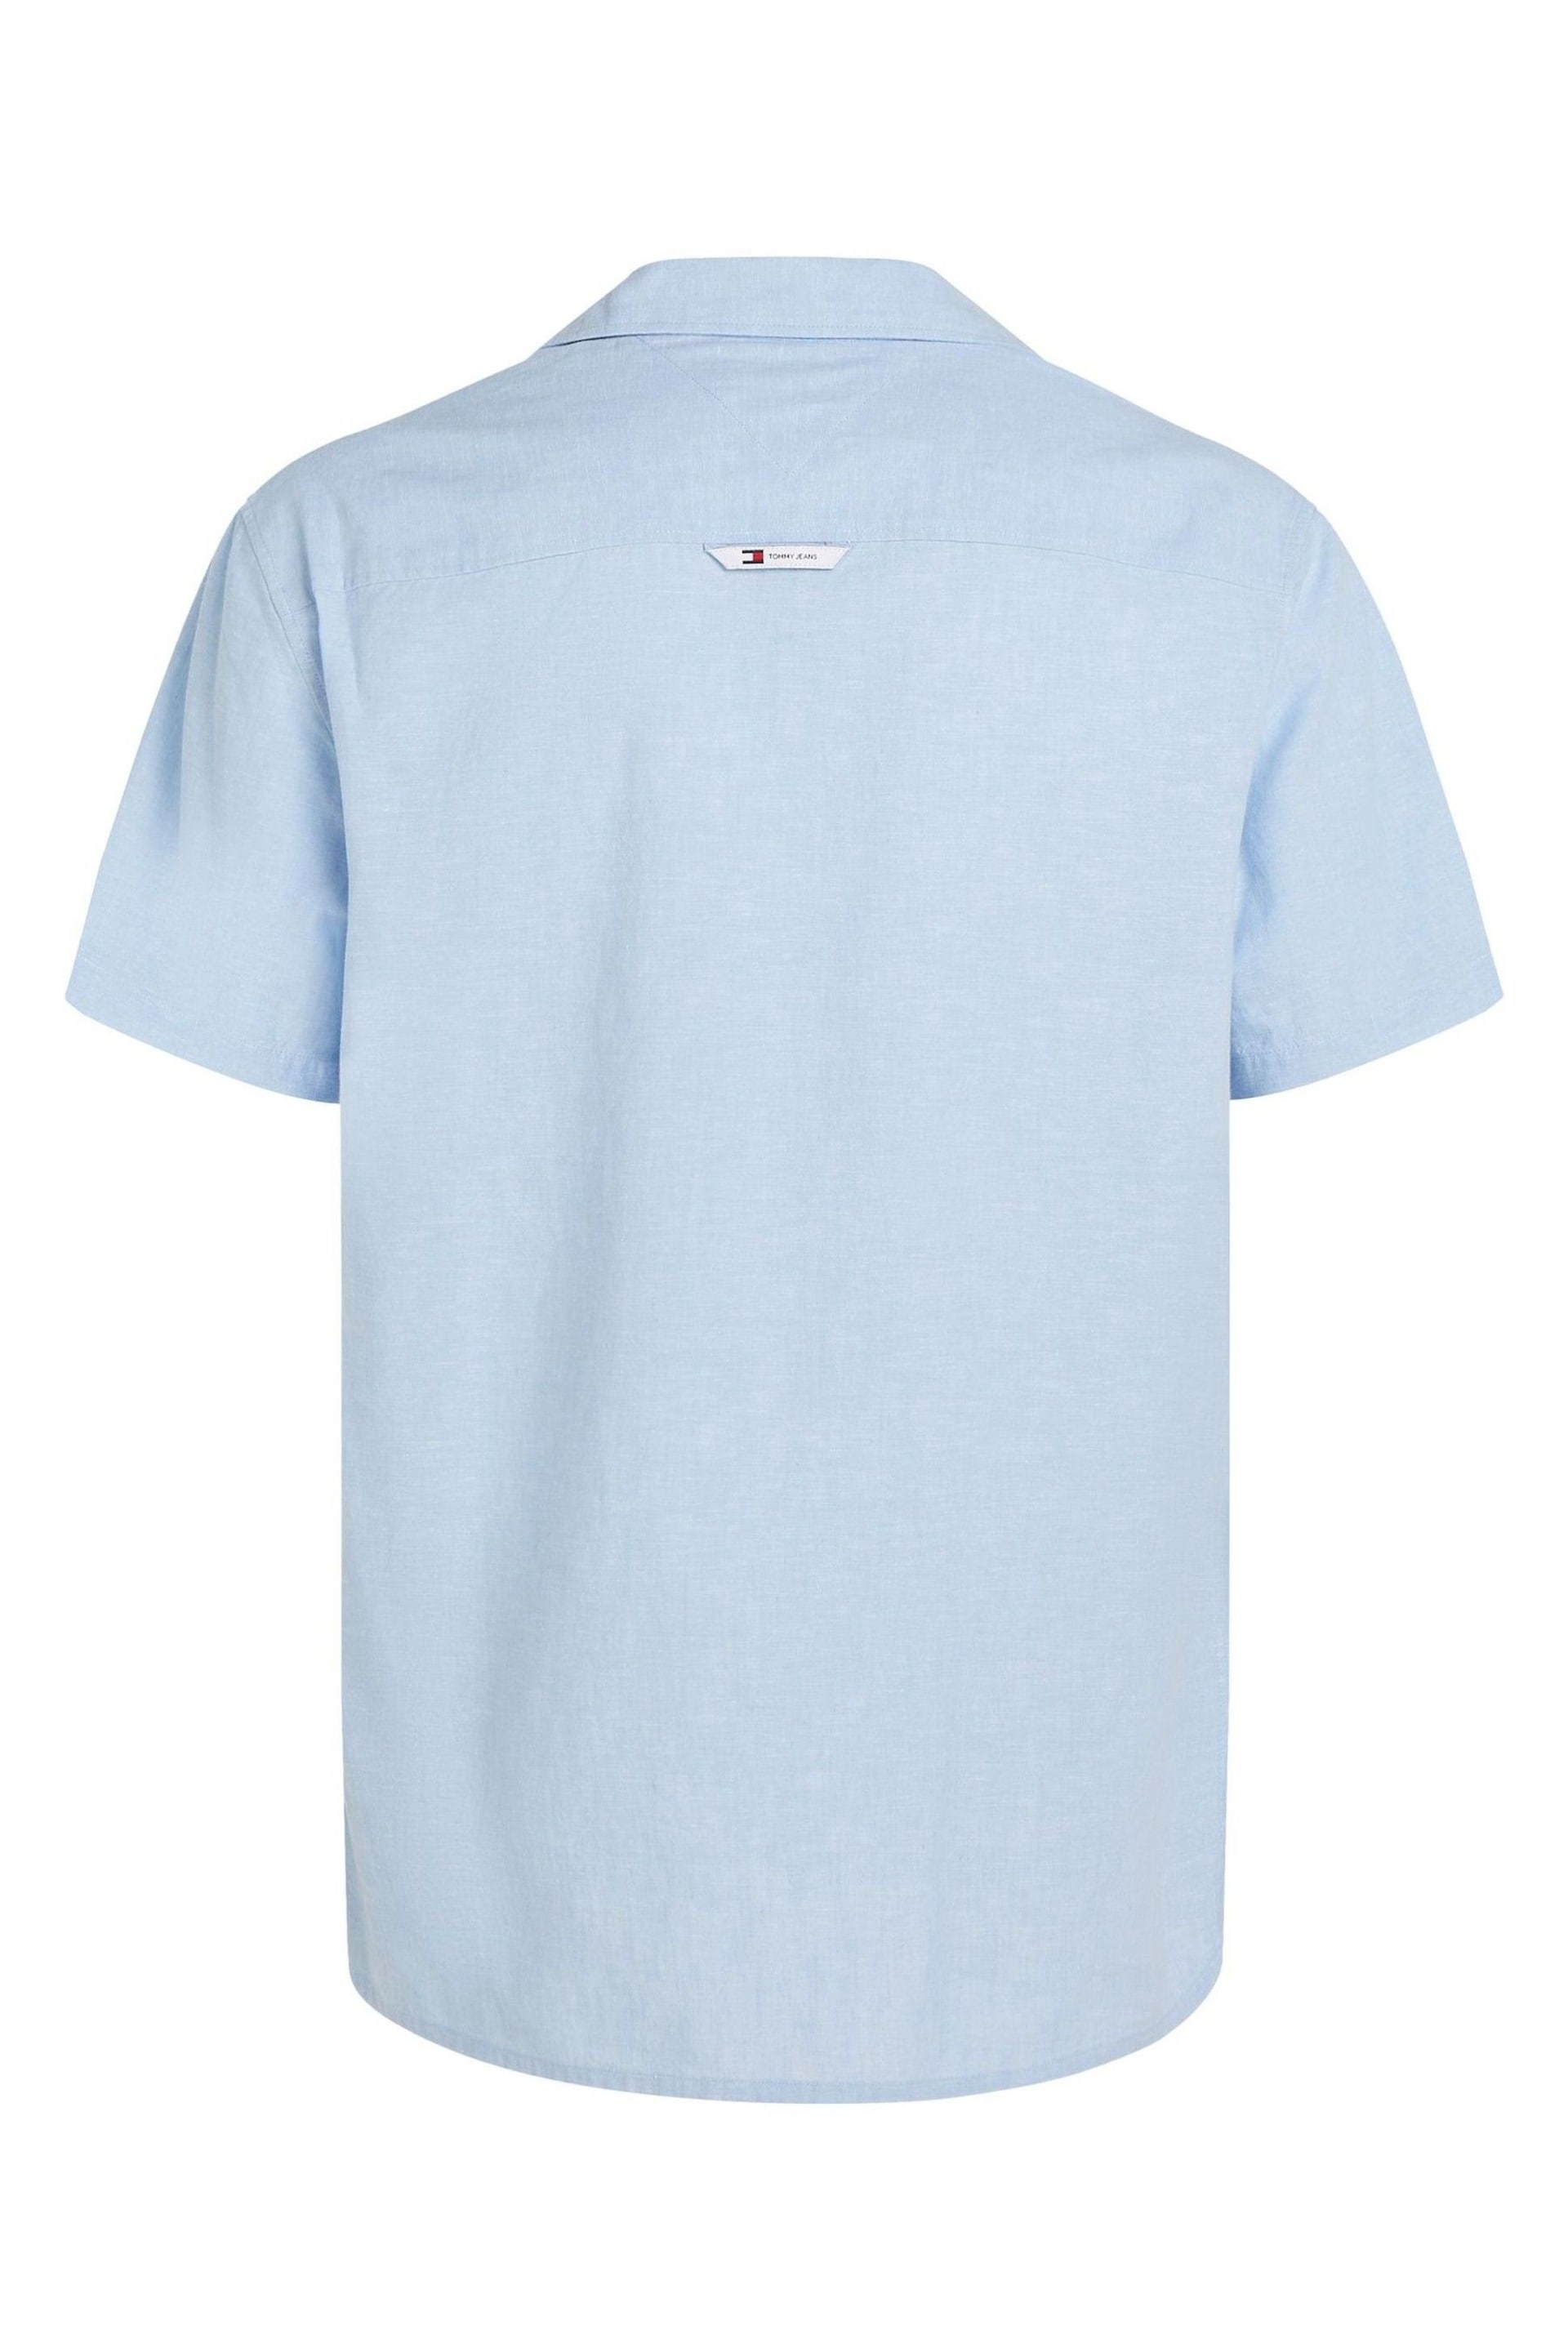 Tommy Jeans Linen Blend Camp Shirt - Image 4 of 4